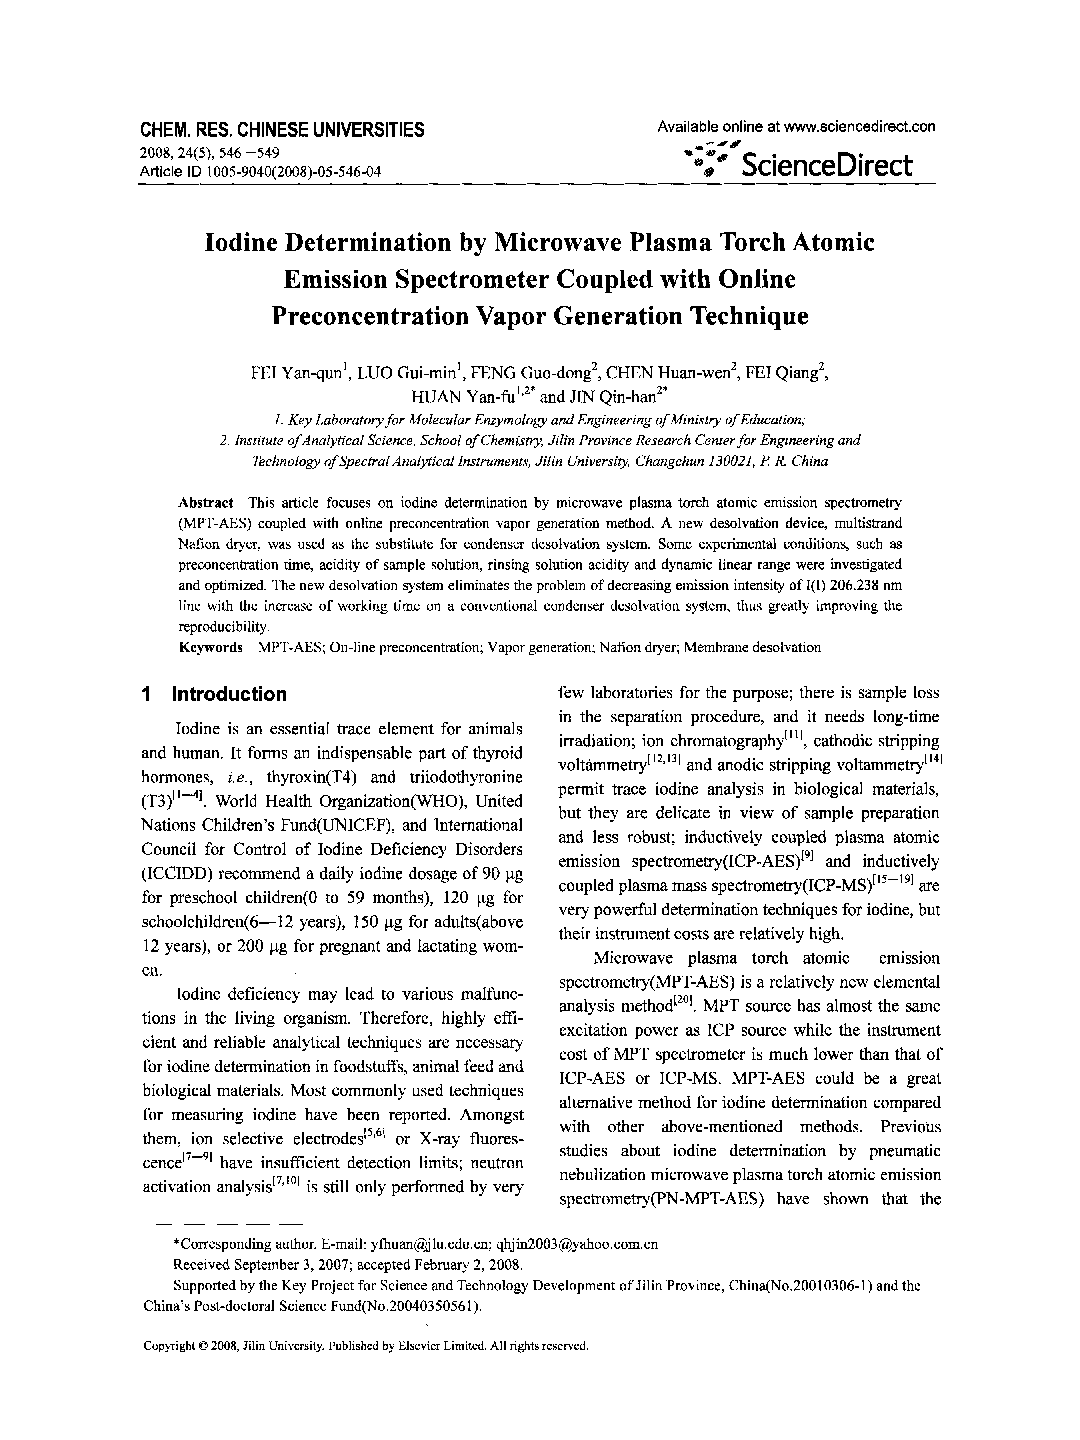 Iodine Determination by Microwave Plasma Torch Atomic Emission Spectrometer Coupled with Online Preconcentration Vapor Generation Technique